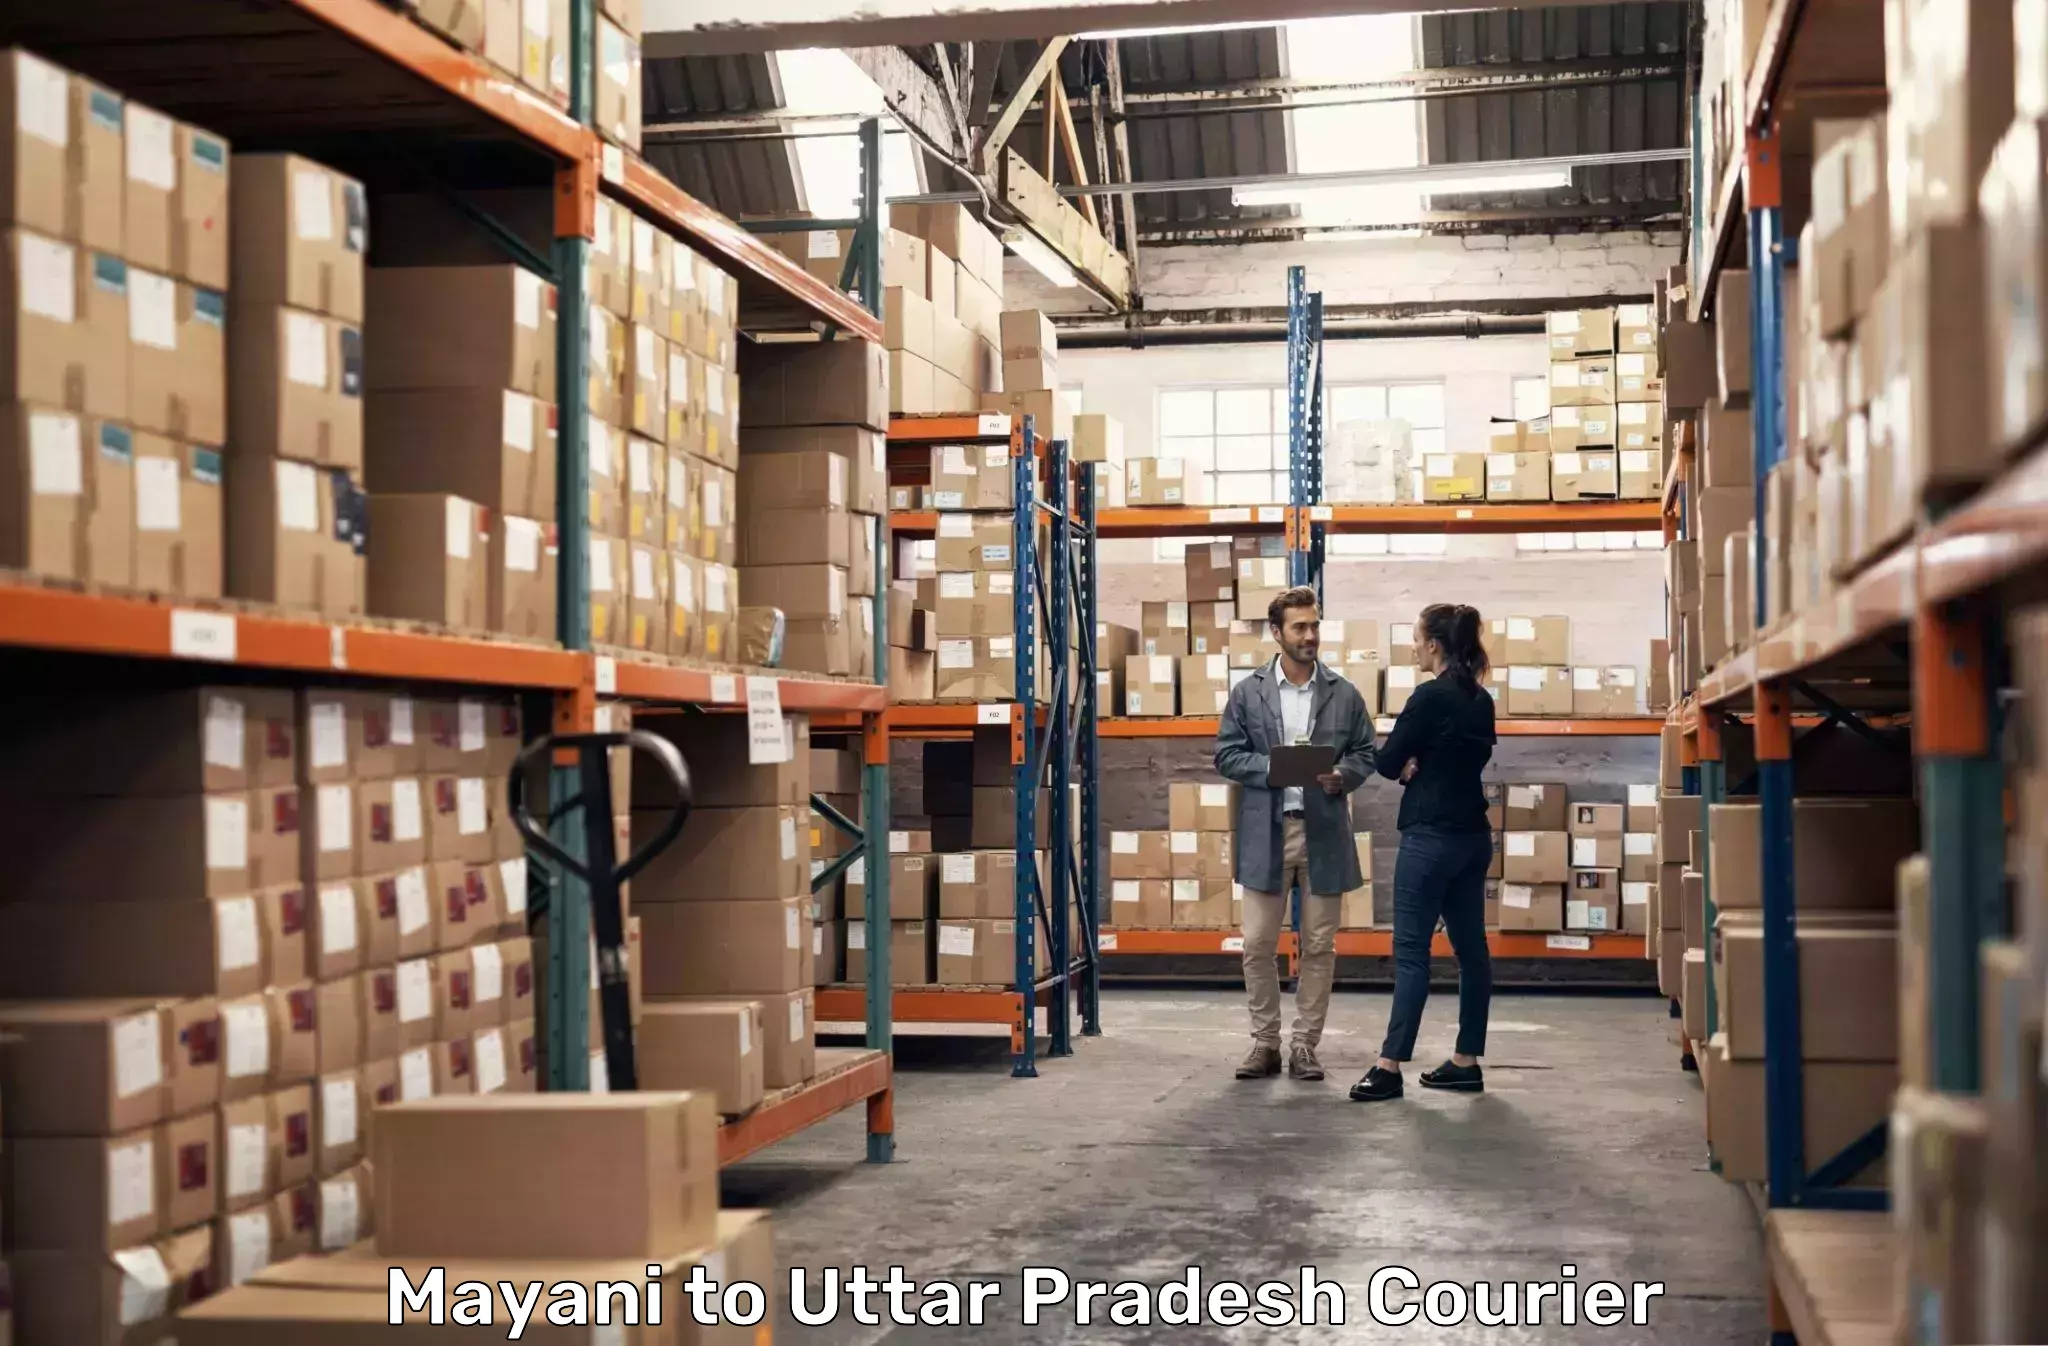 Courier service comparison Mayani to Uttar Pradesh